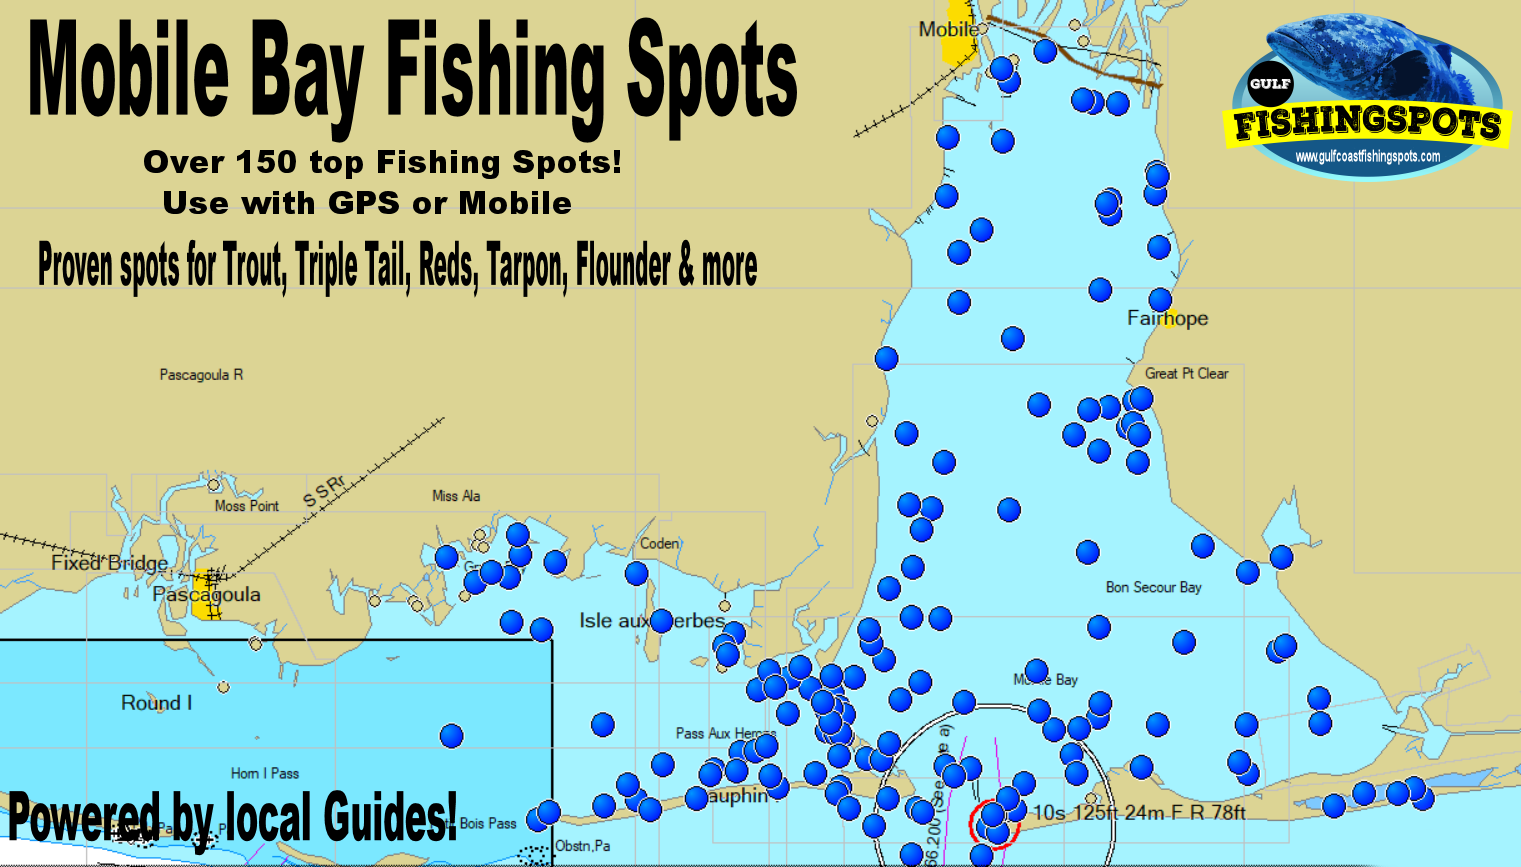 Mobile Bay Fishing Spots for GPS - Alabama - Gulf Coast Fishing Spots